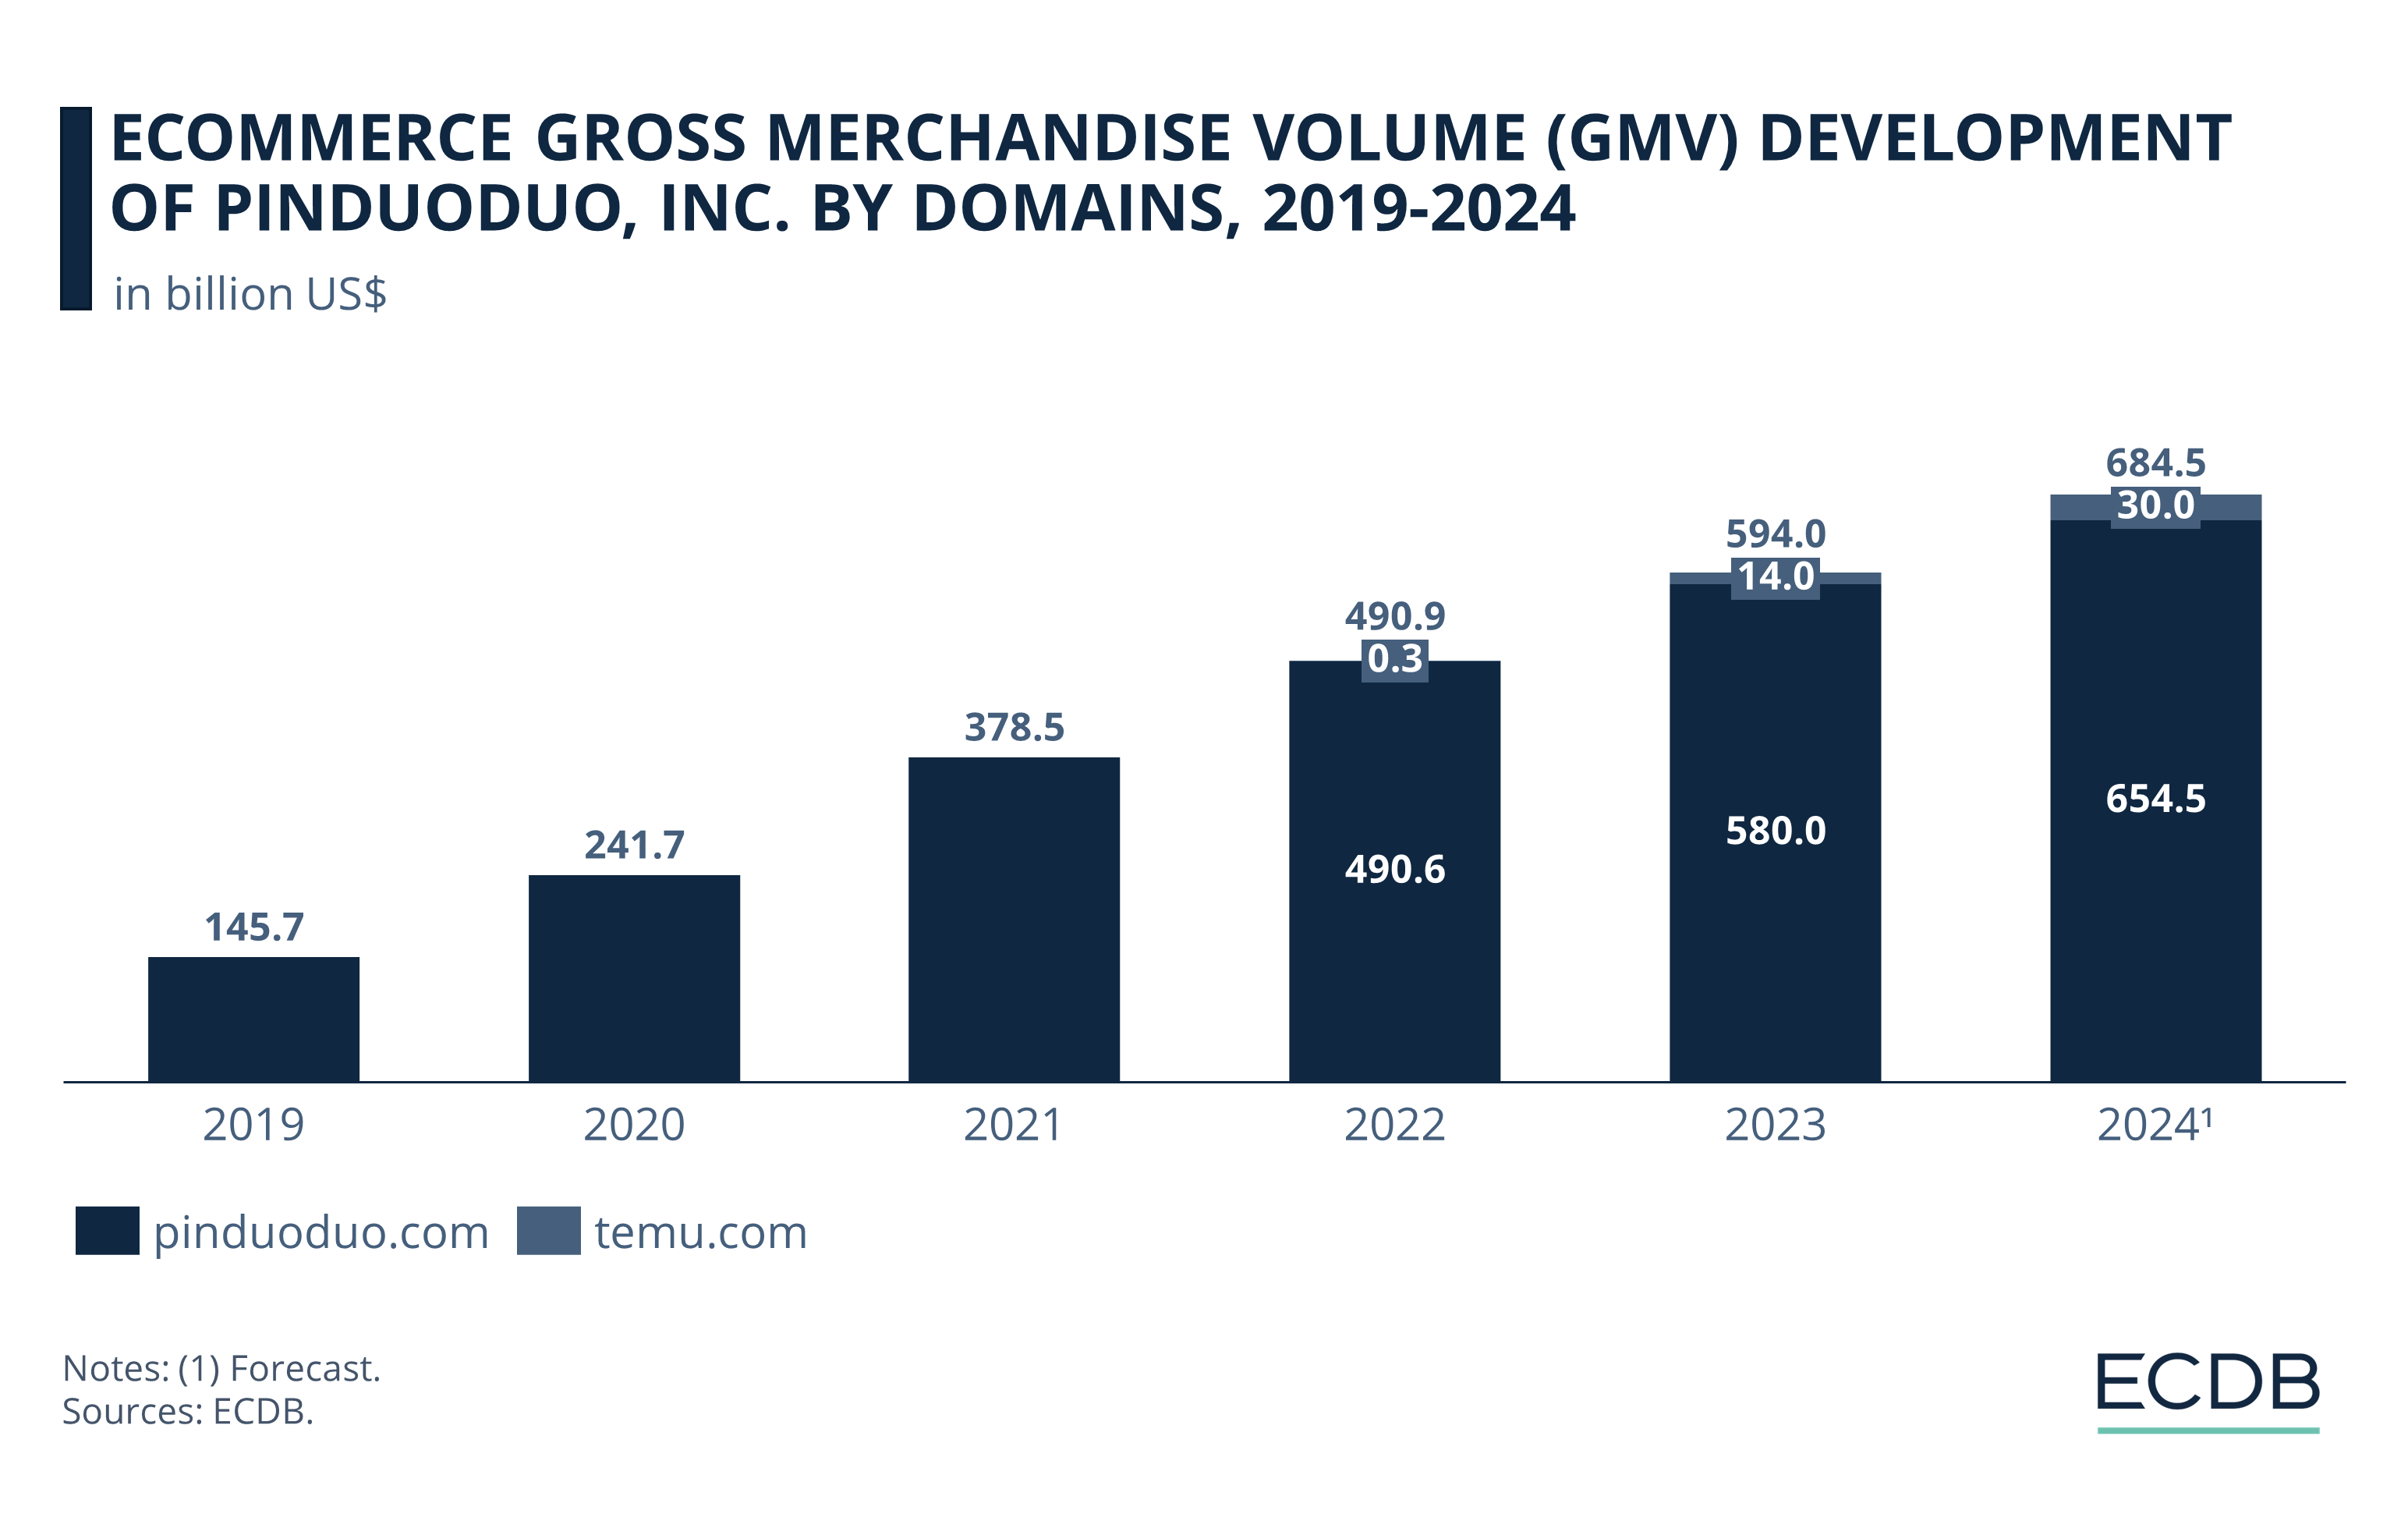 eCommerce Gross Merchandise Volume (GMV) Development of Pinduoduo, Inc. by Domains, 2019-2024